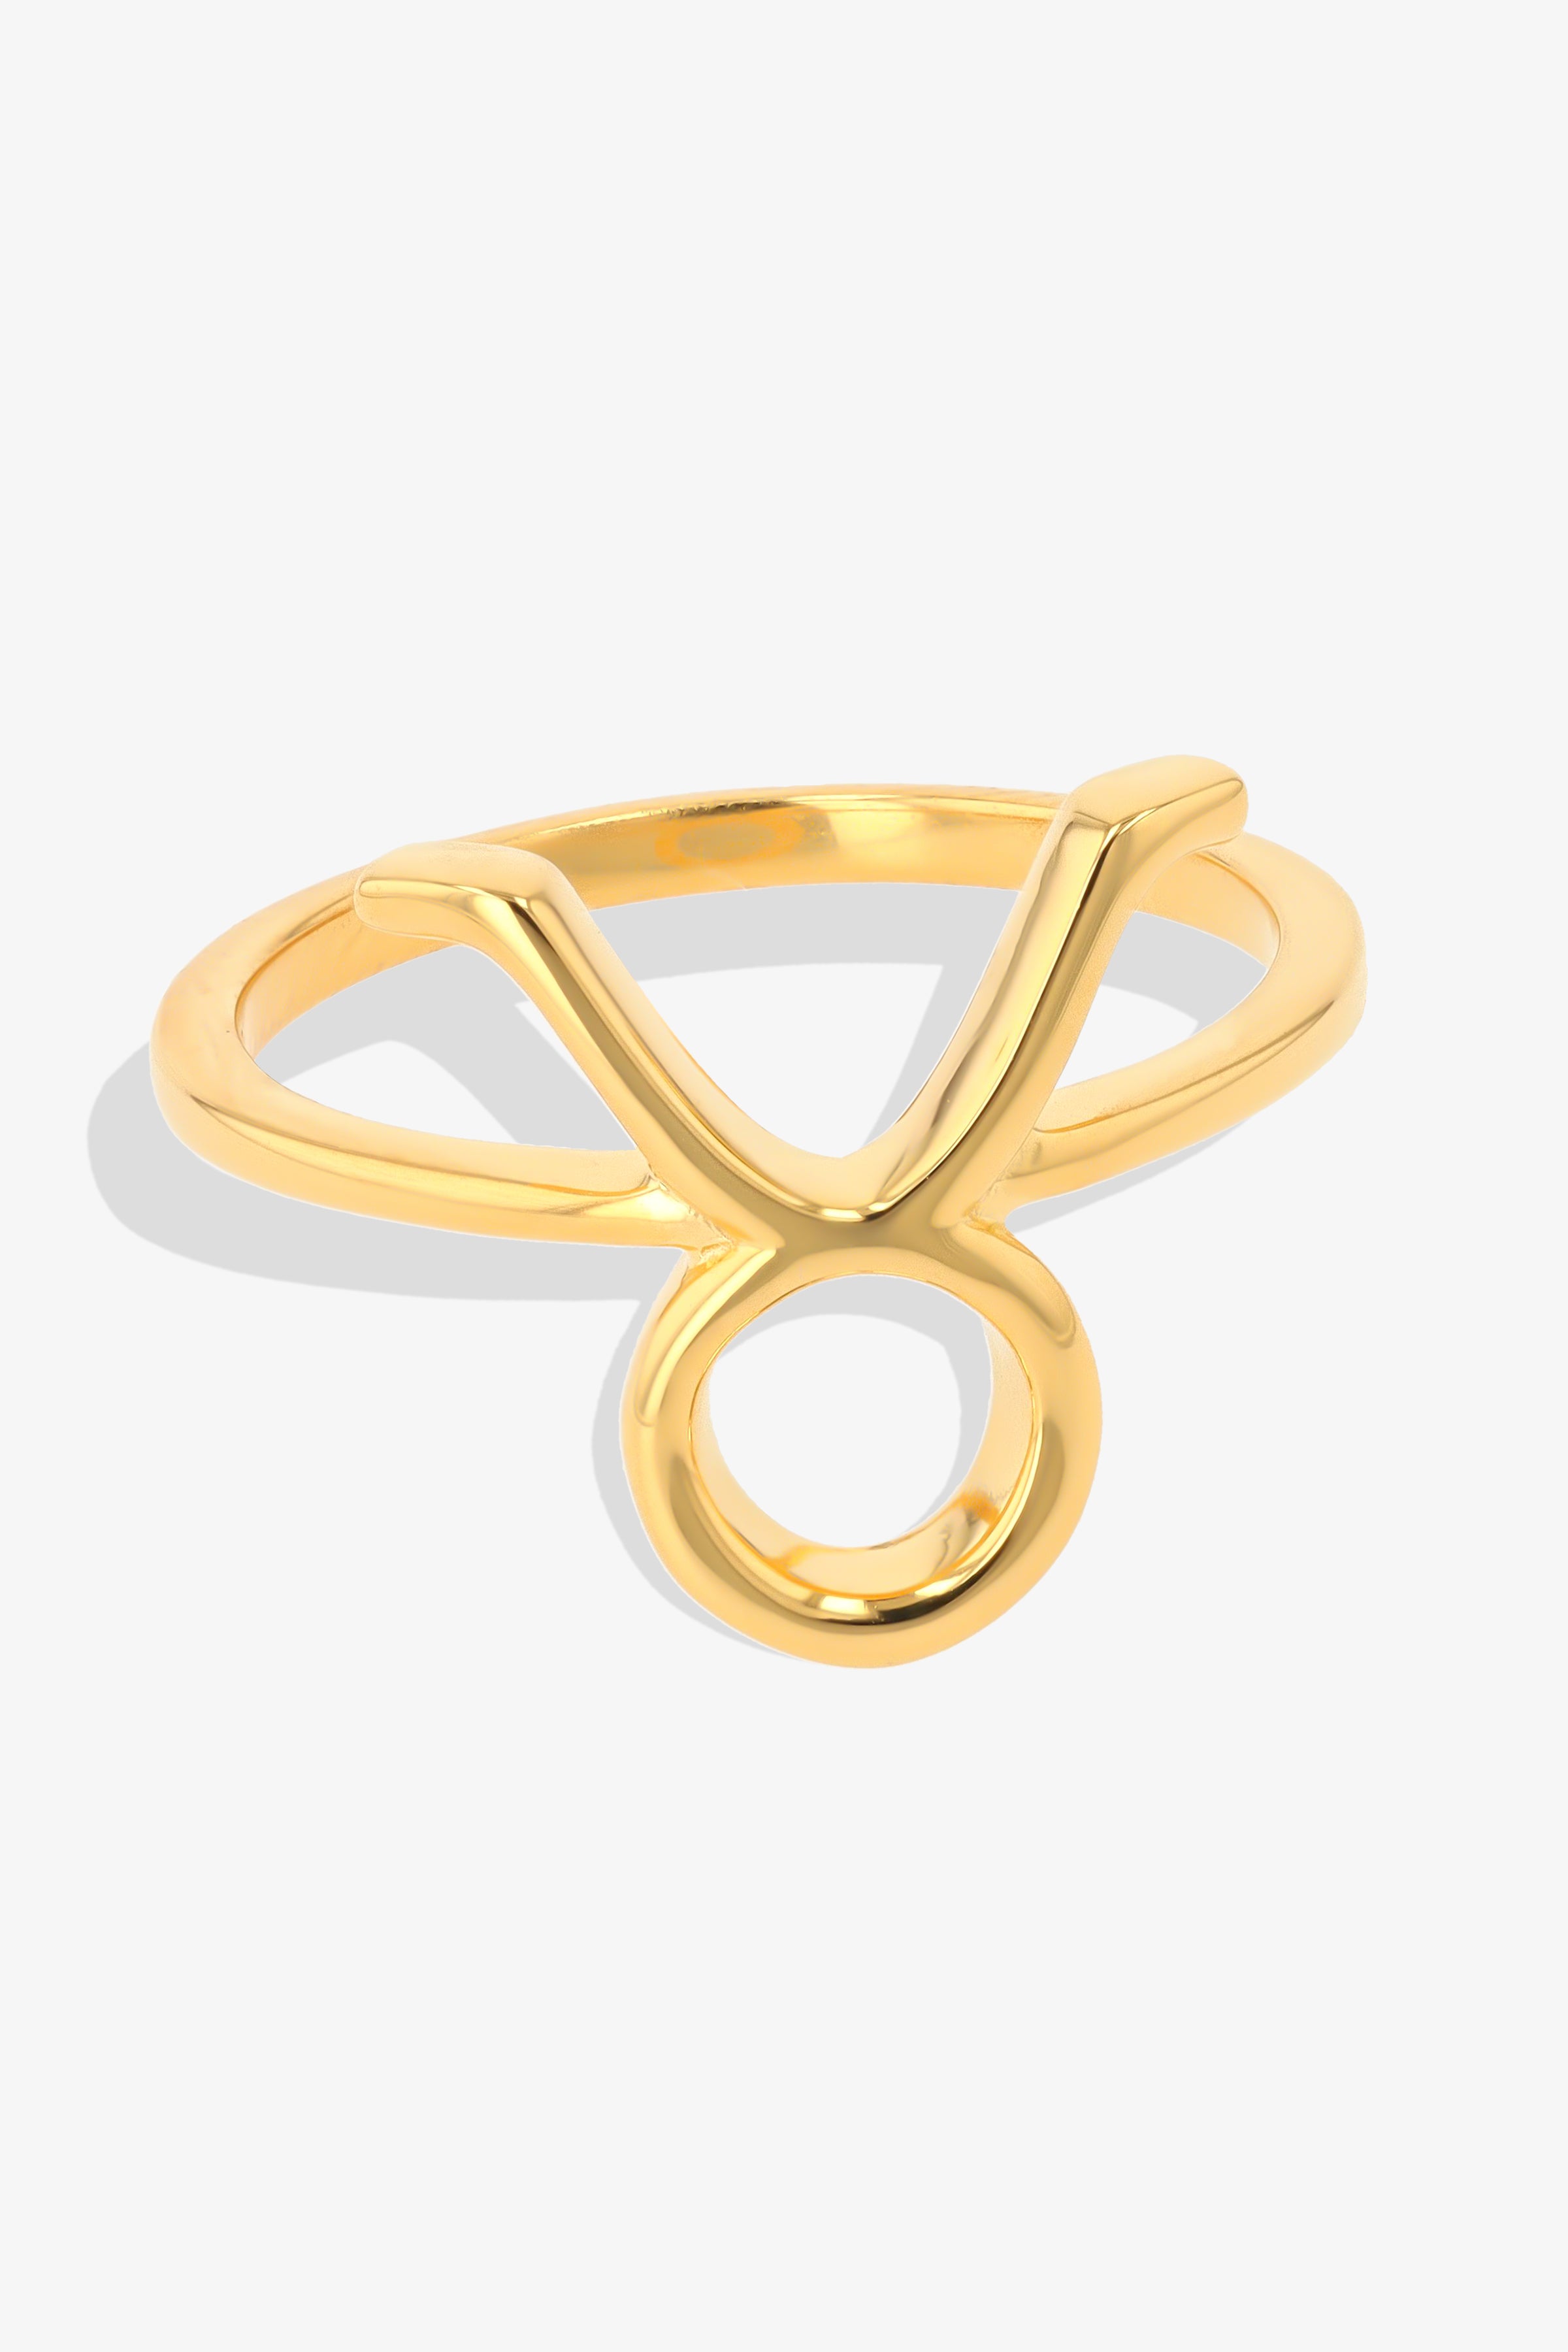 Taurus Zodiac 18k Gold Vermeil Ring